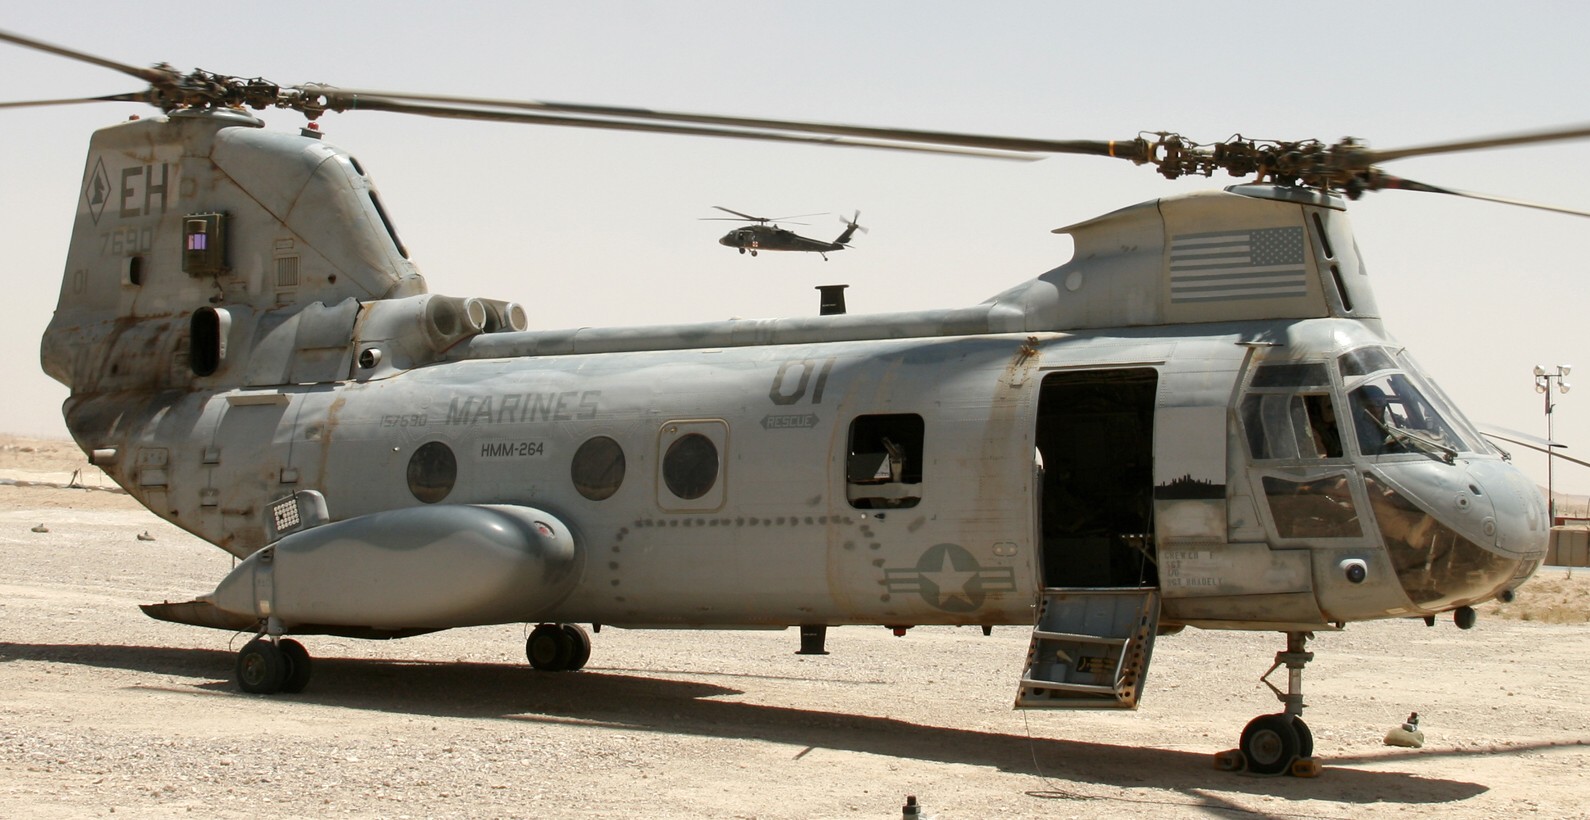 hmm-264 black knights ch-46e sea knight marine medium helicopter squadron usmc al qaim iraq 2005 14